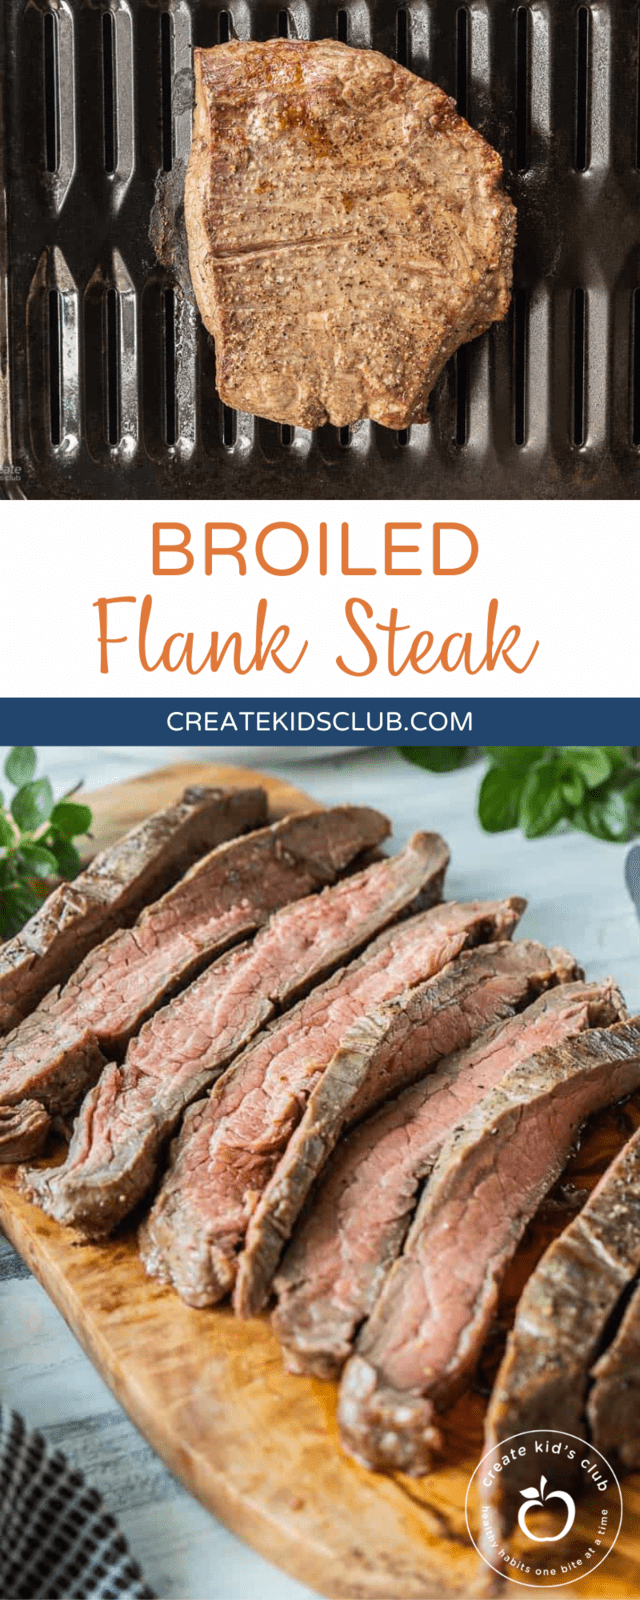 Pinterest image of broiled flank steak